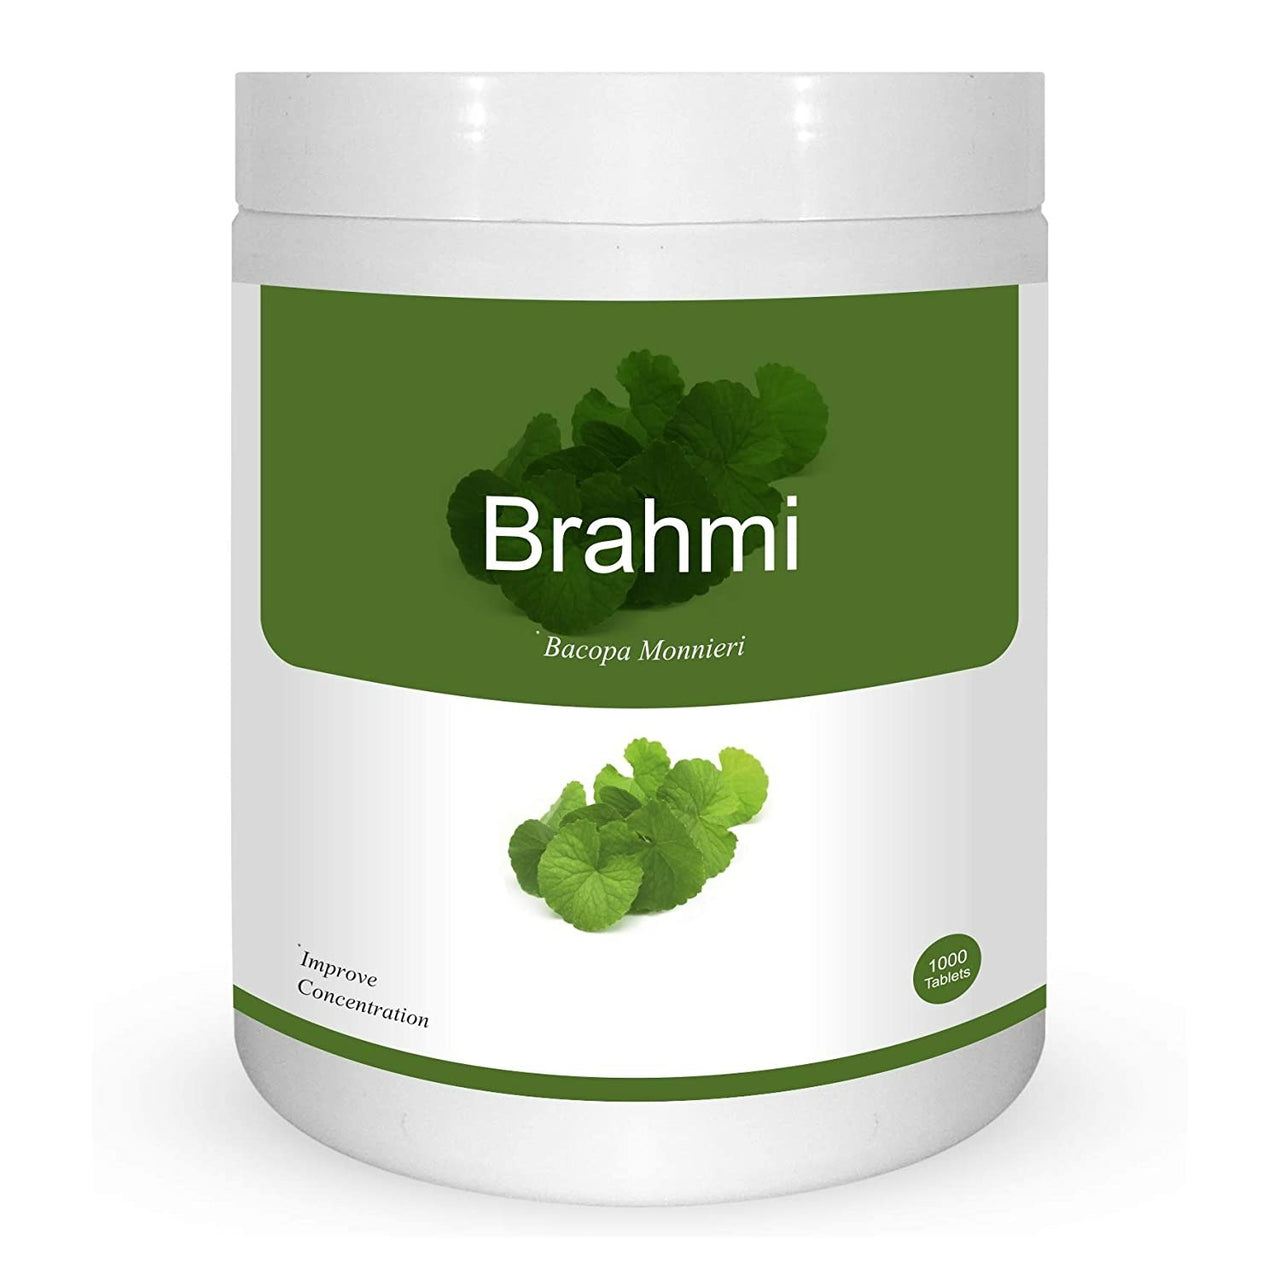 Herb Essential Brahmi Tablets - Distacart